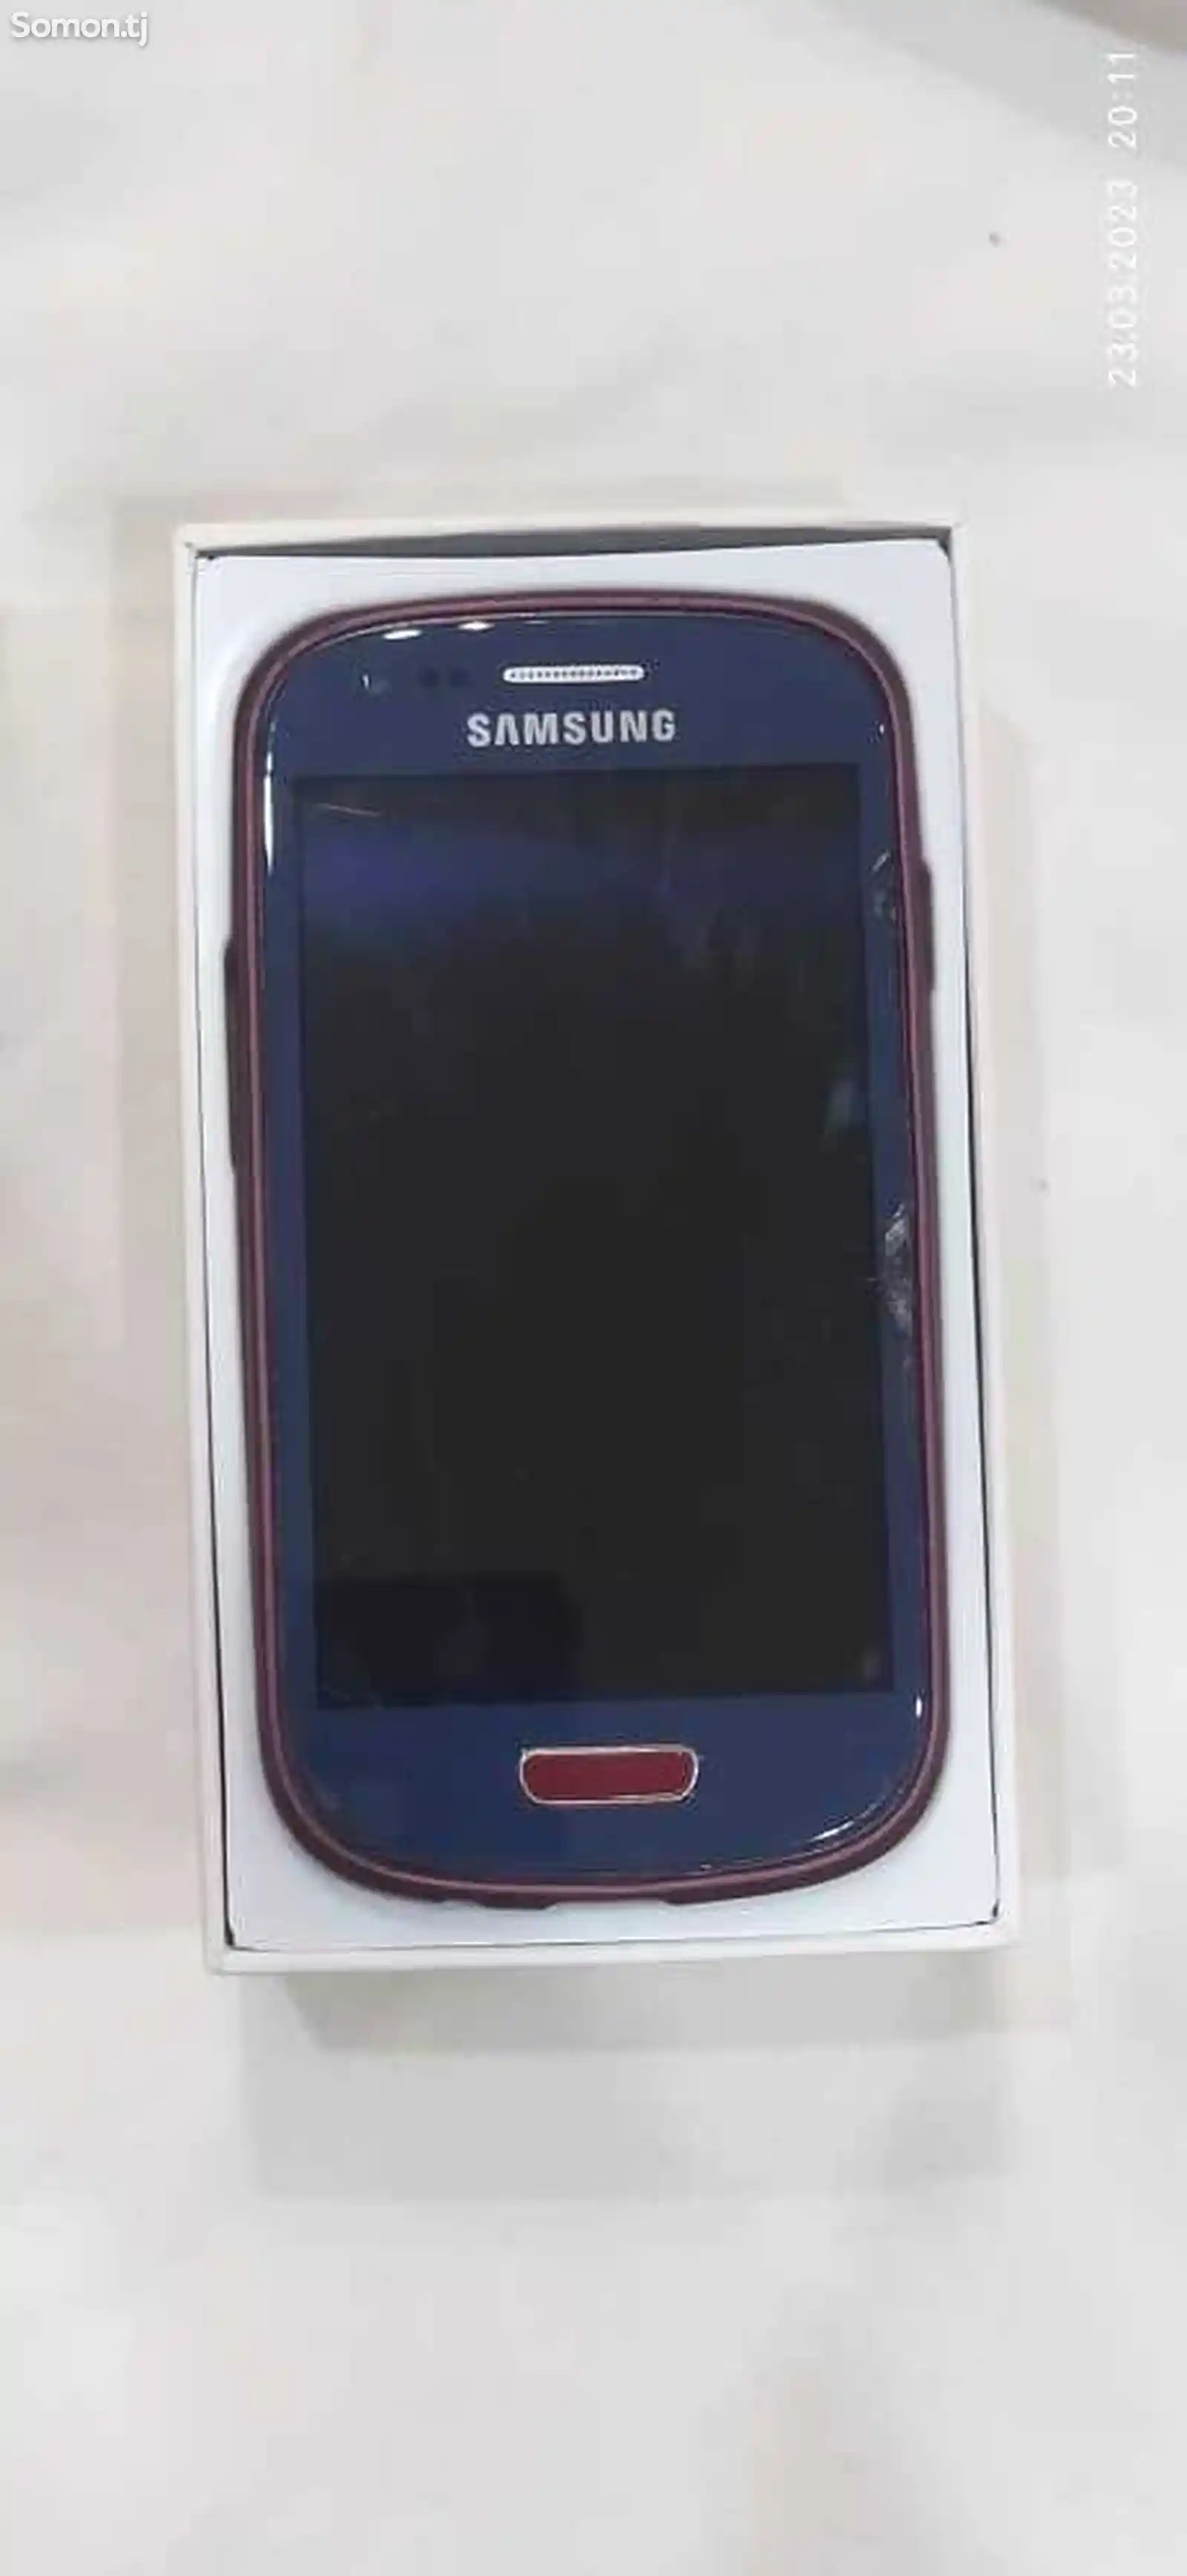 Samsung Galaxy S3 Mini-3